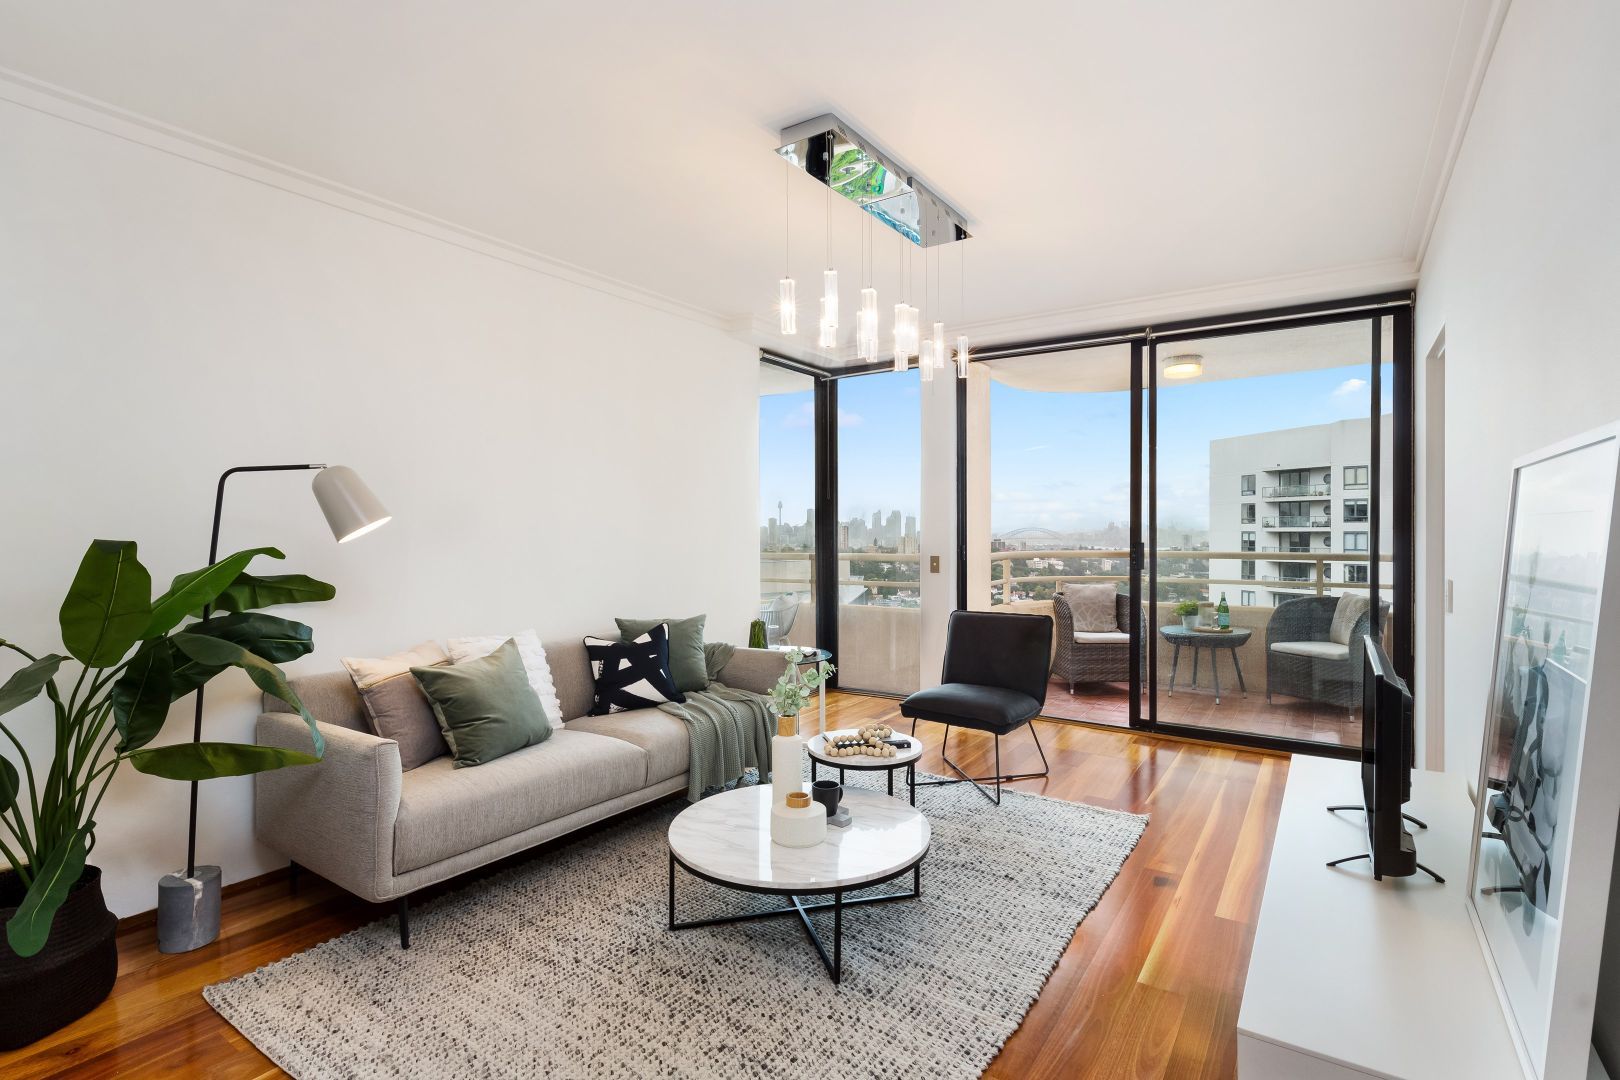 2 bedrooms Apartment / Unit / Flat in 1102/251 Oxford Street BONDI JUNCTION NSW, 2022